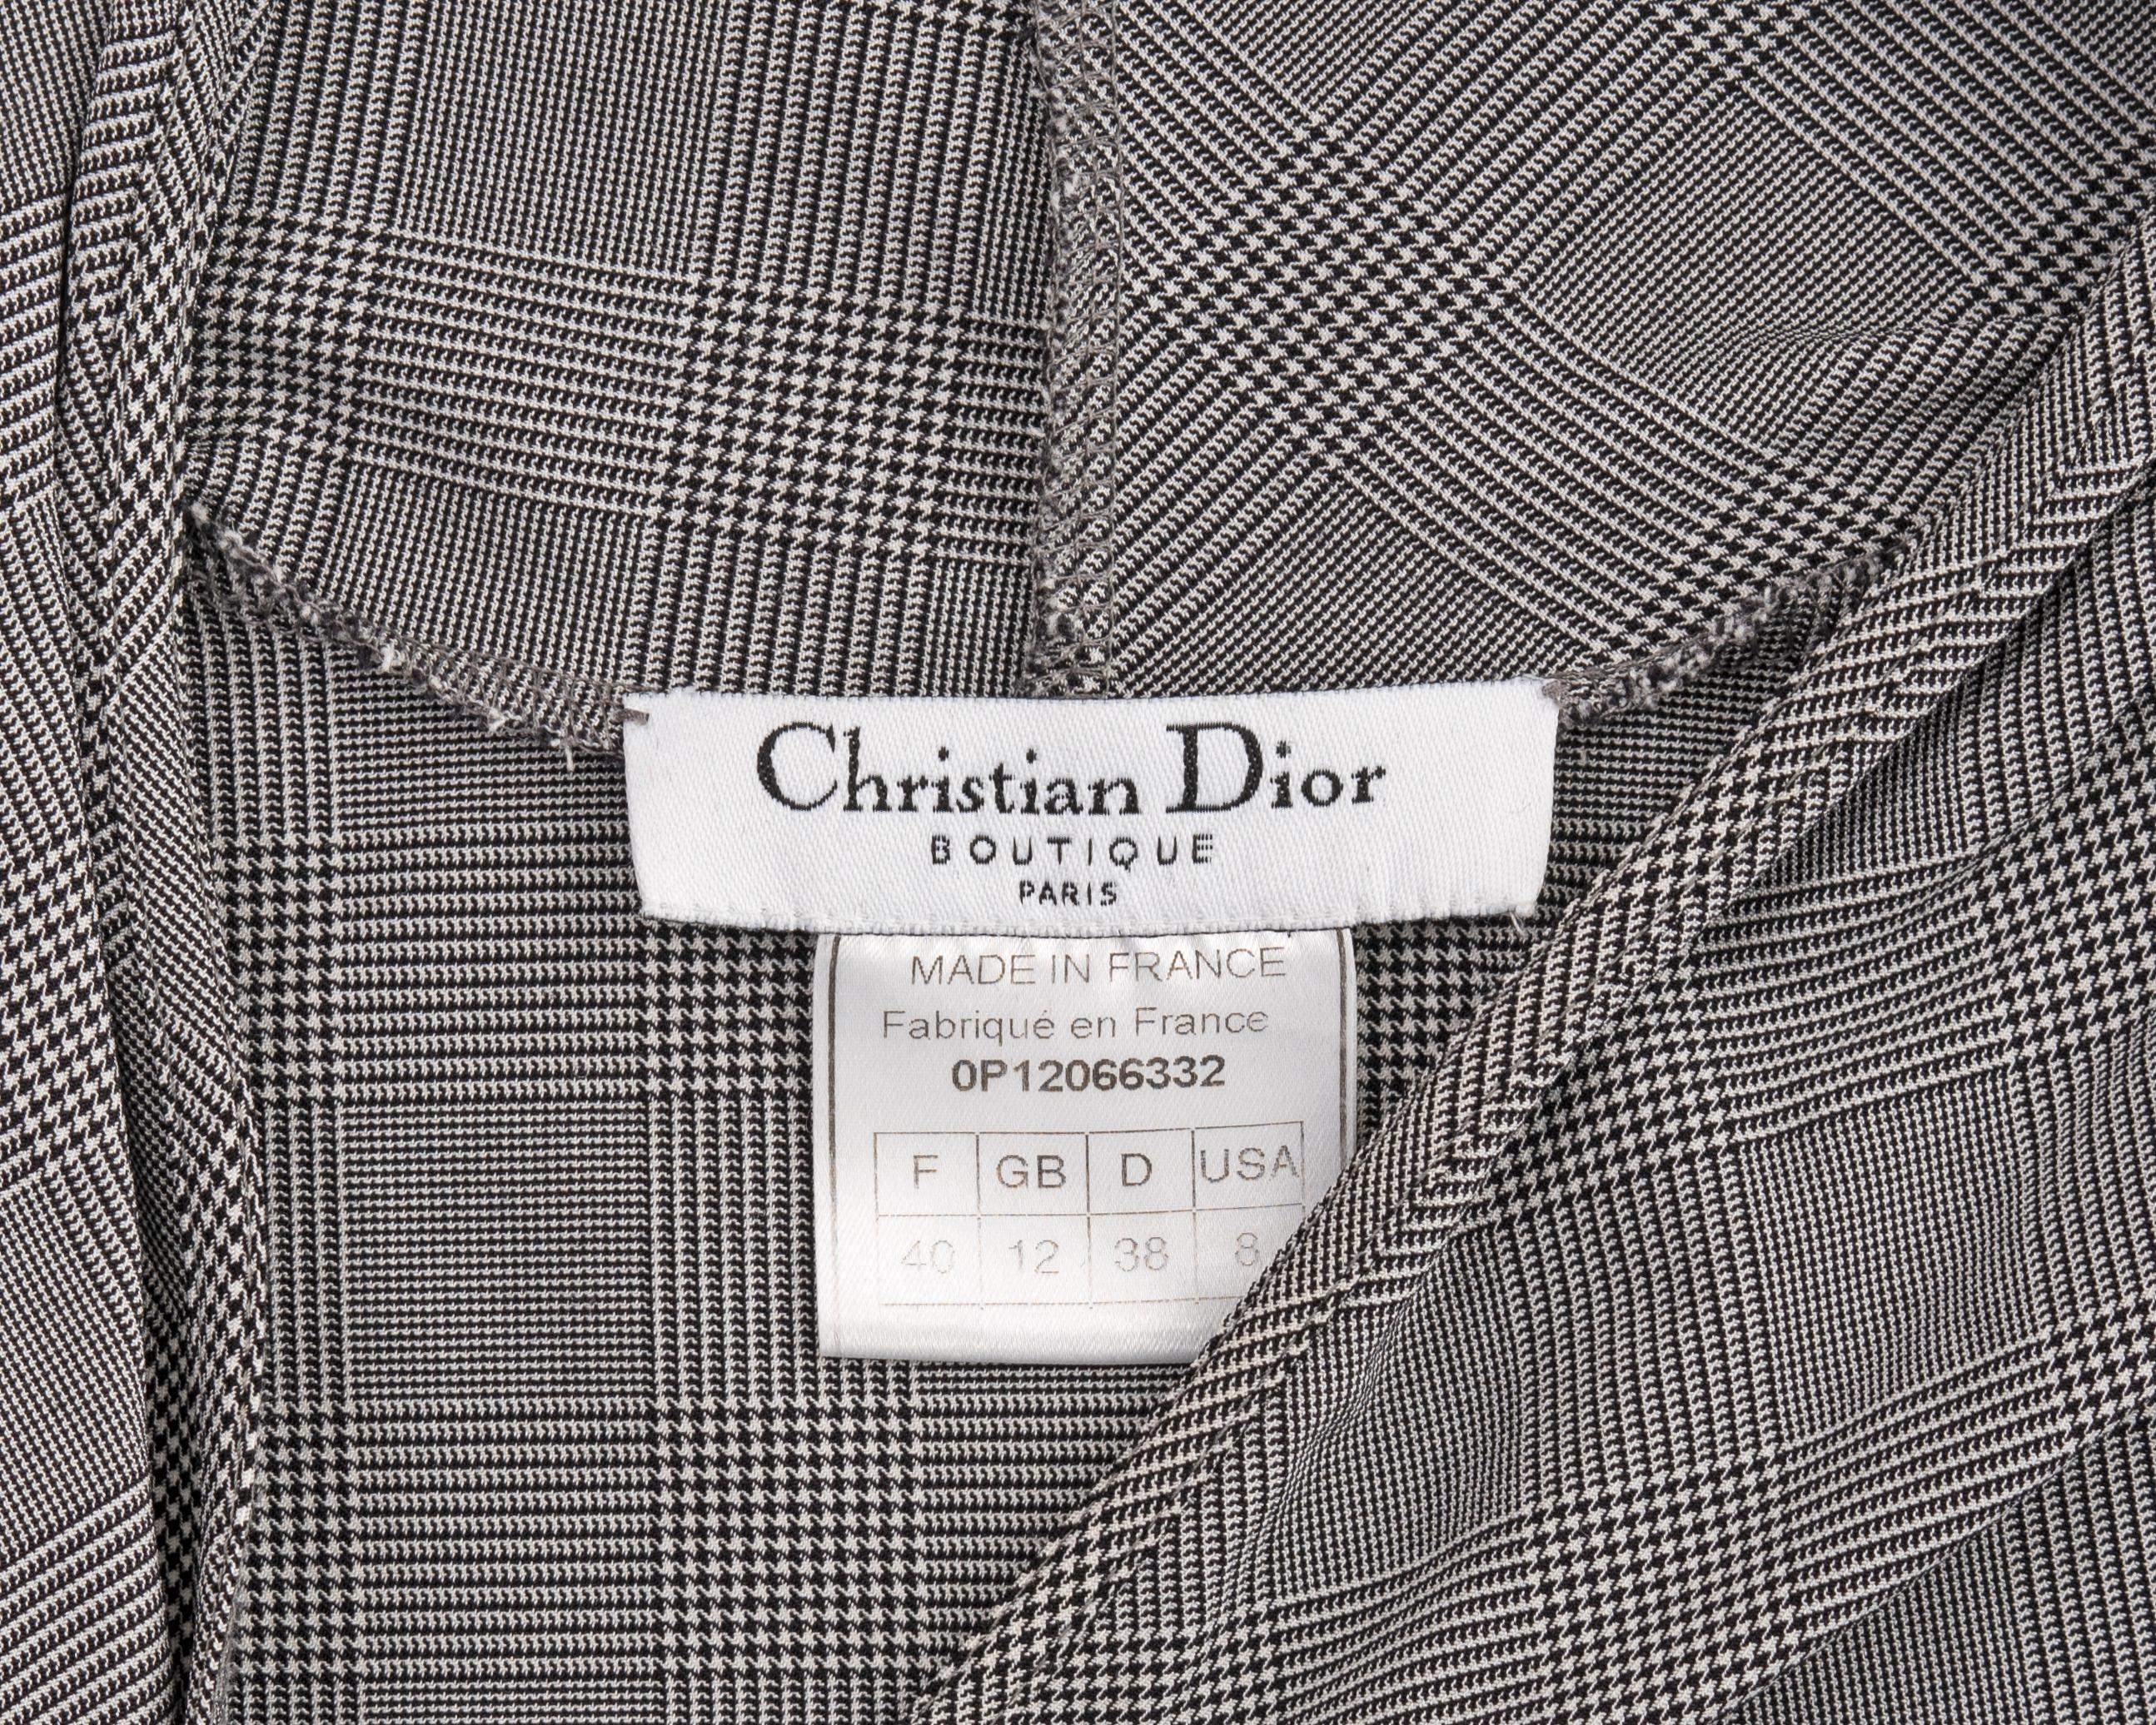 Christian Dior by John Galliano grey checked nylon sheath dress, ss 2000 For Sale 4